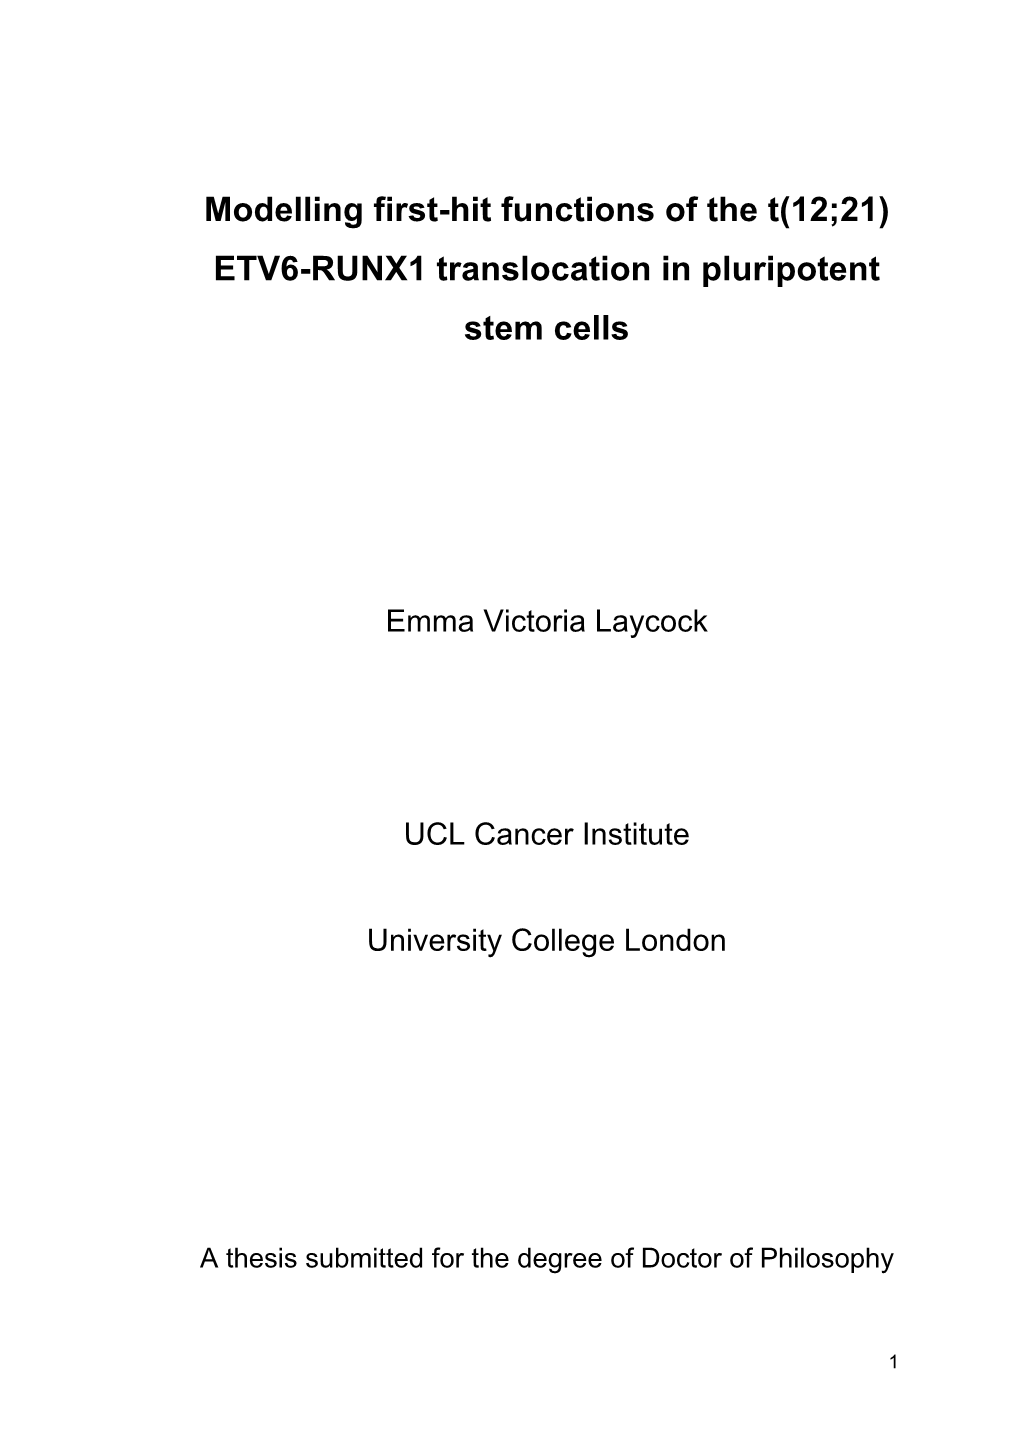 ETV6-RUNX1 Translocation in Pluripotent Stem Cells